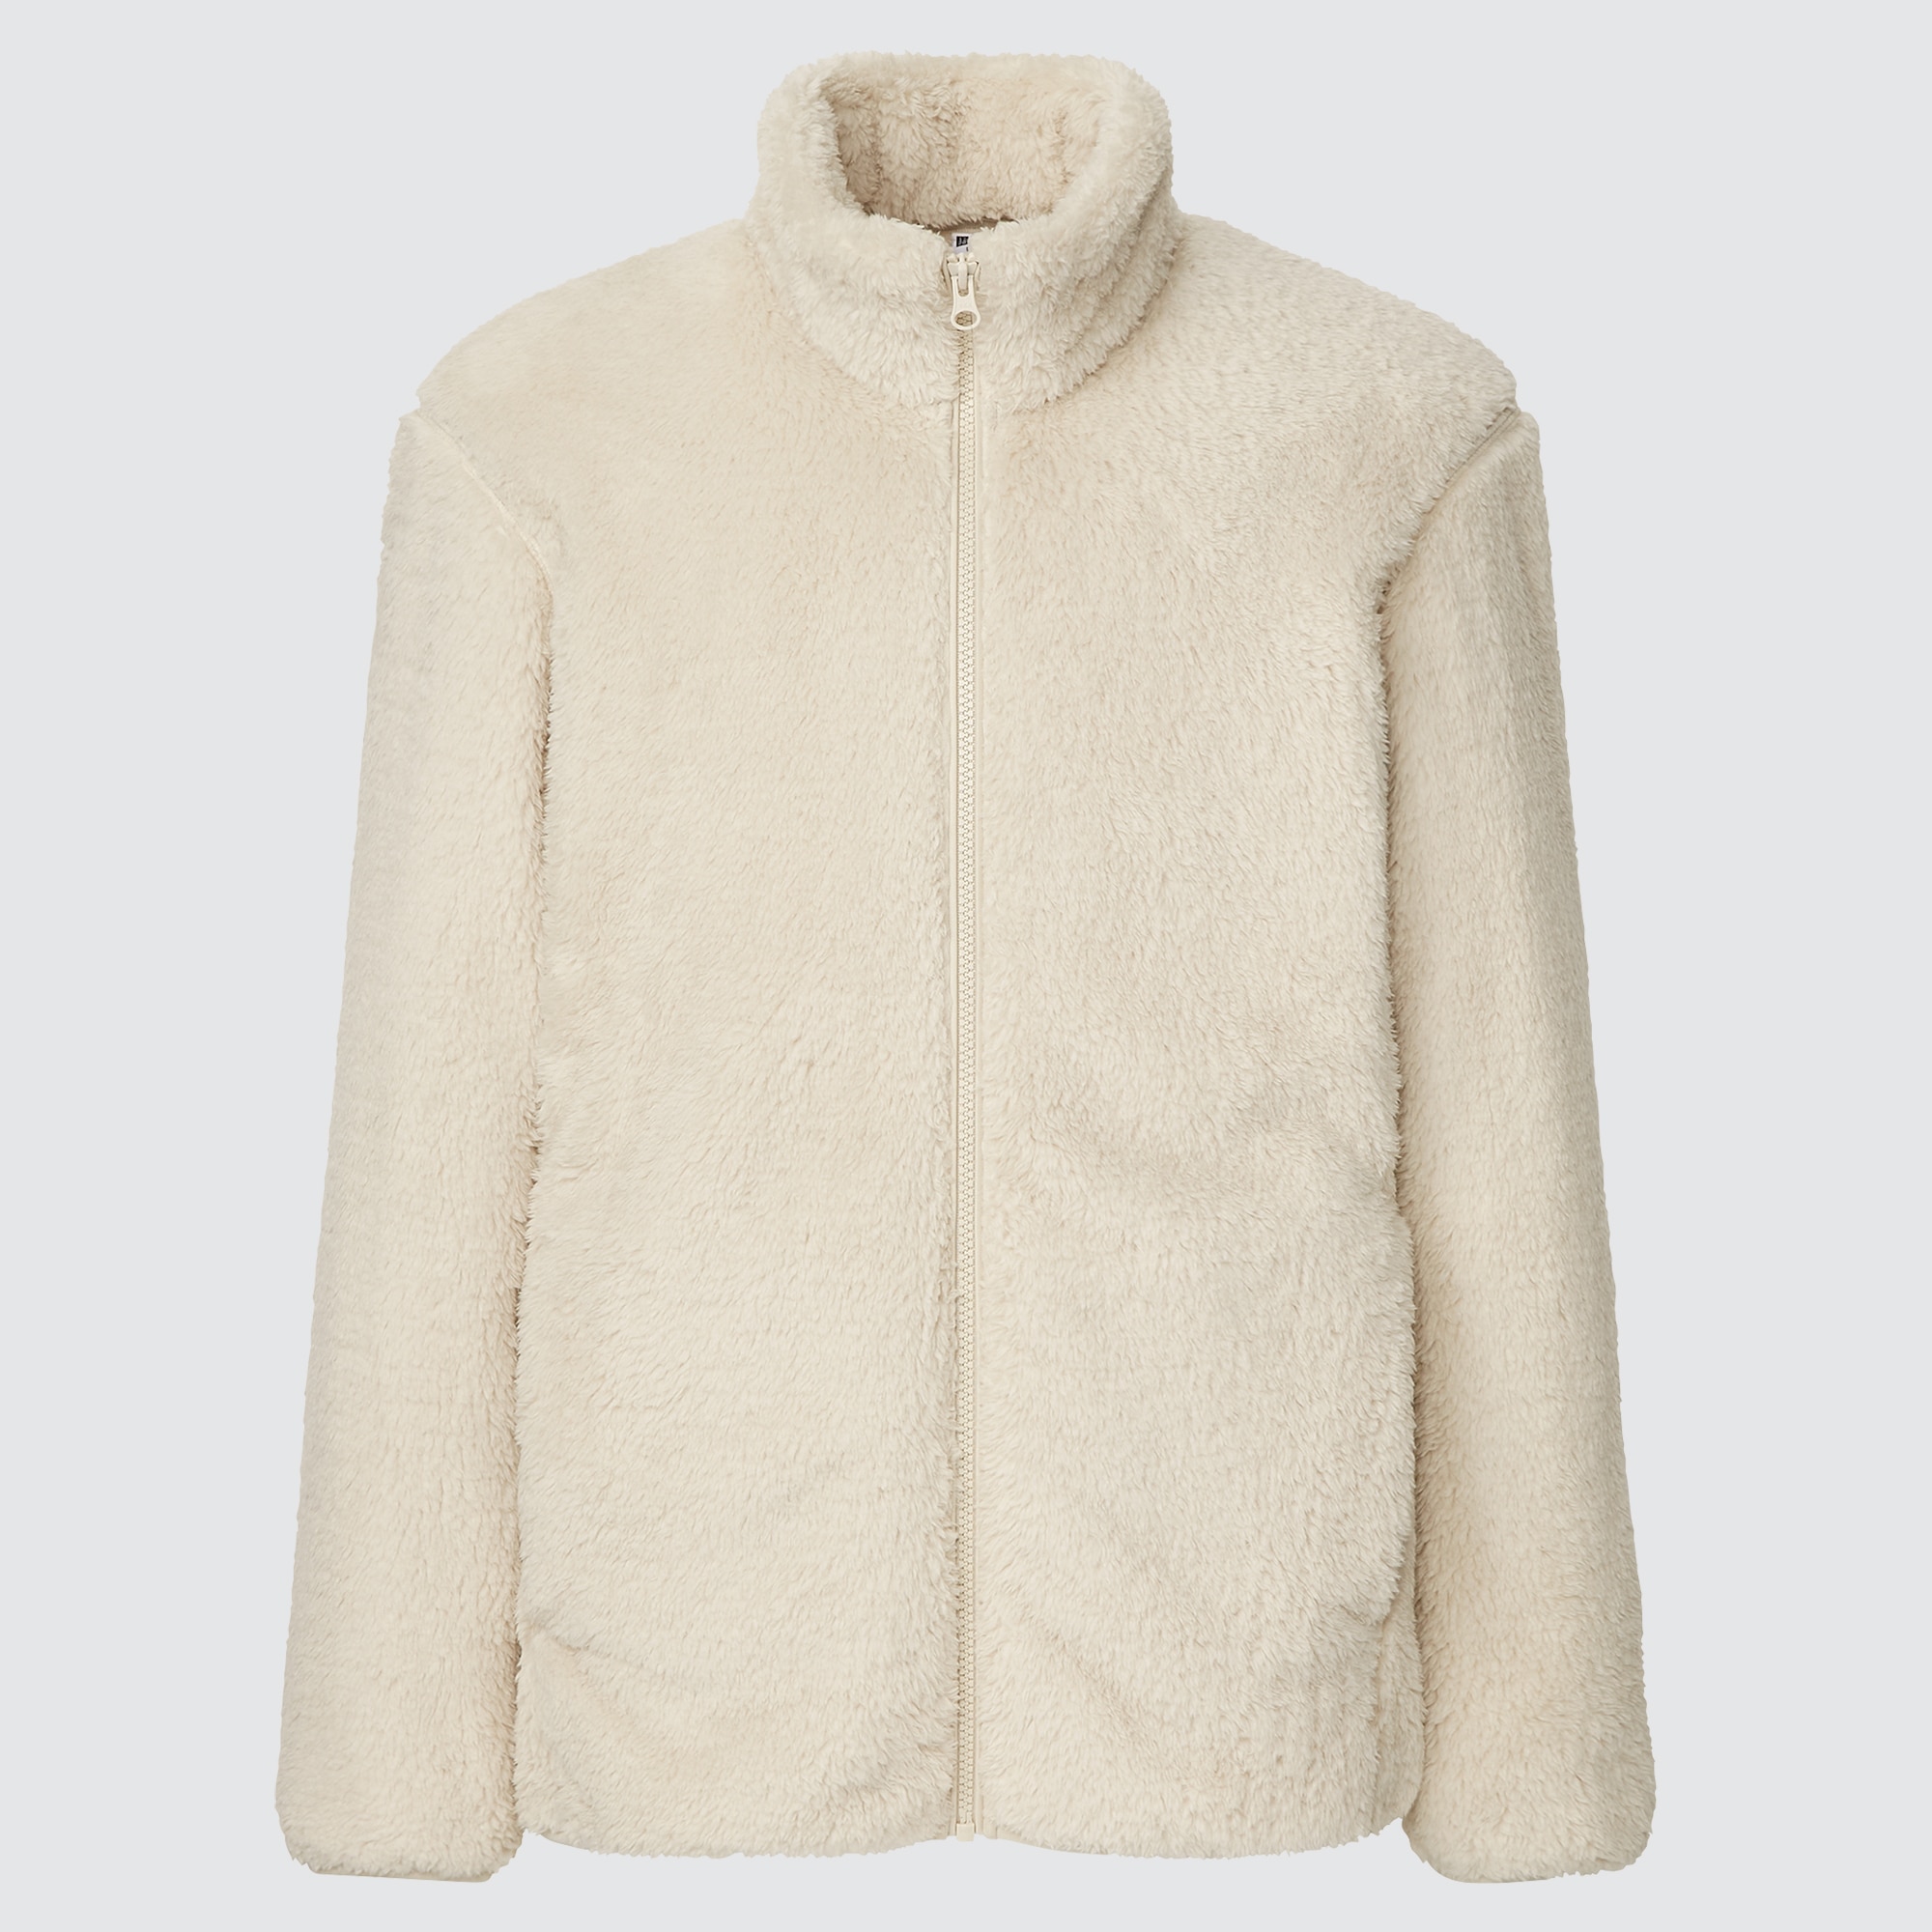 Reviews for Fluffy Yarn Fleece Full-Zip Jacket (2021 Edition